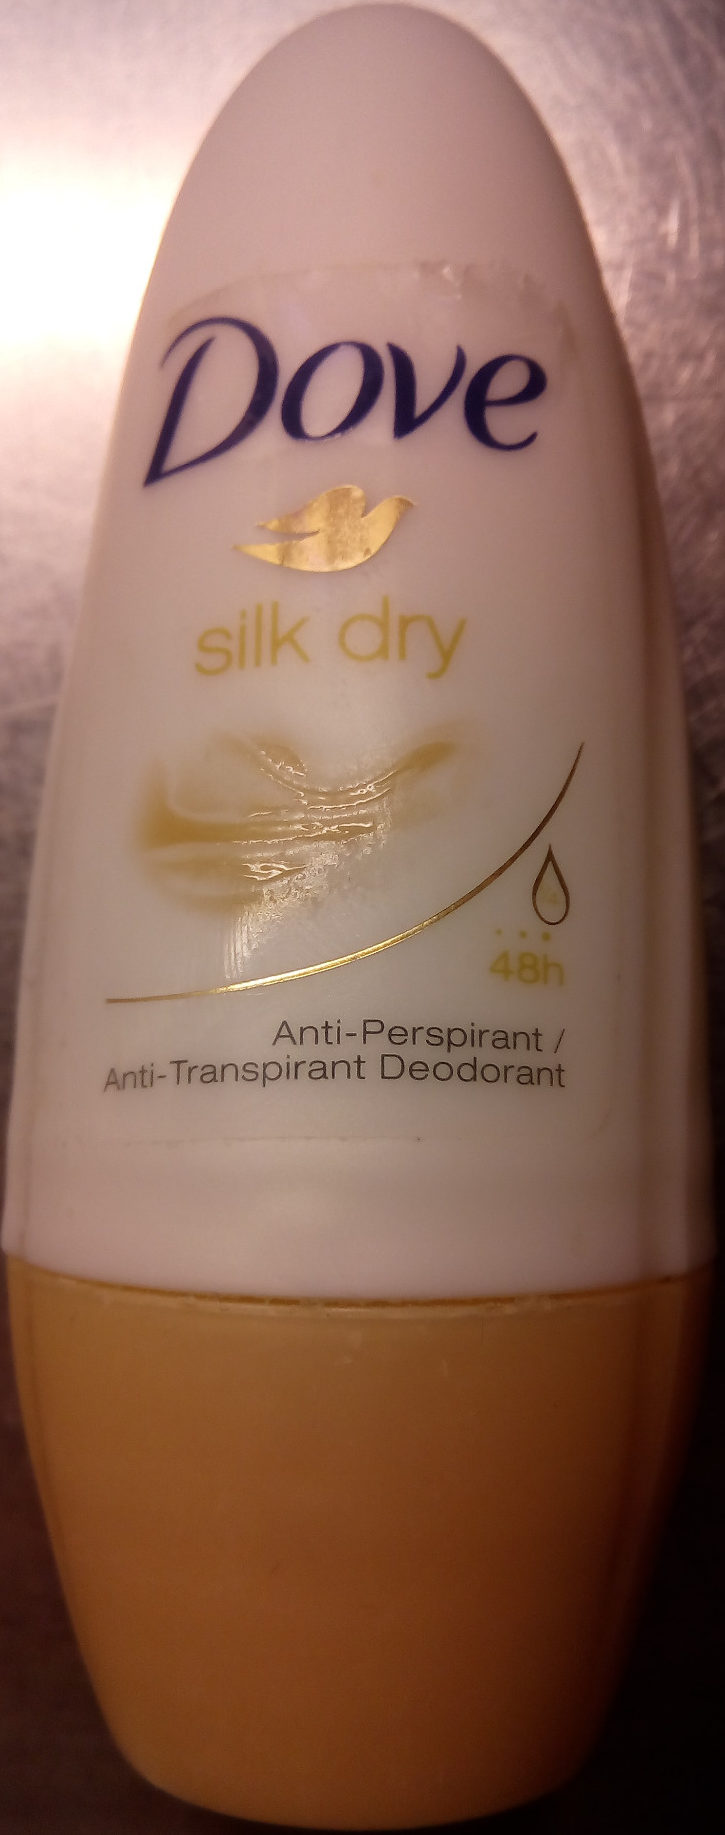 Dove silk dry 24h - Product - en